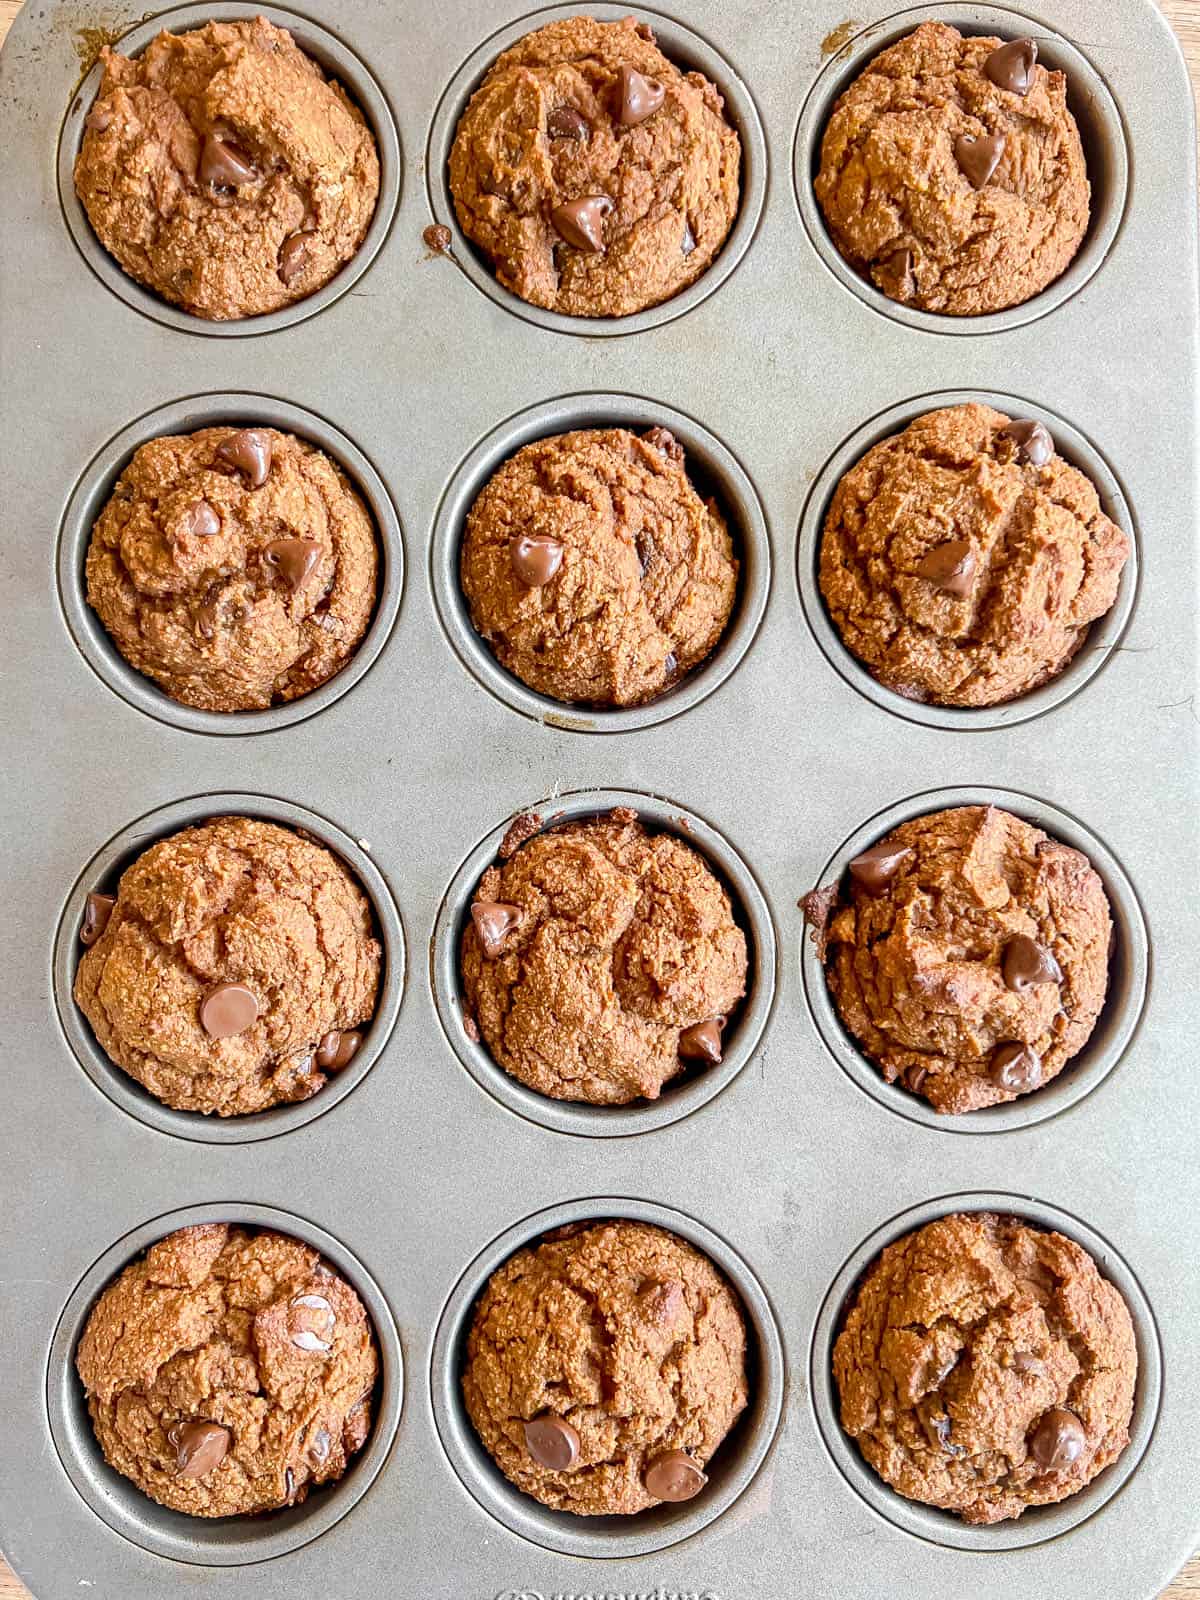 Paleo pumpkin muffins after baking.